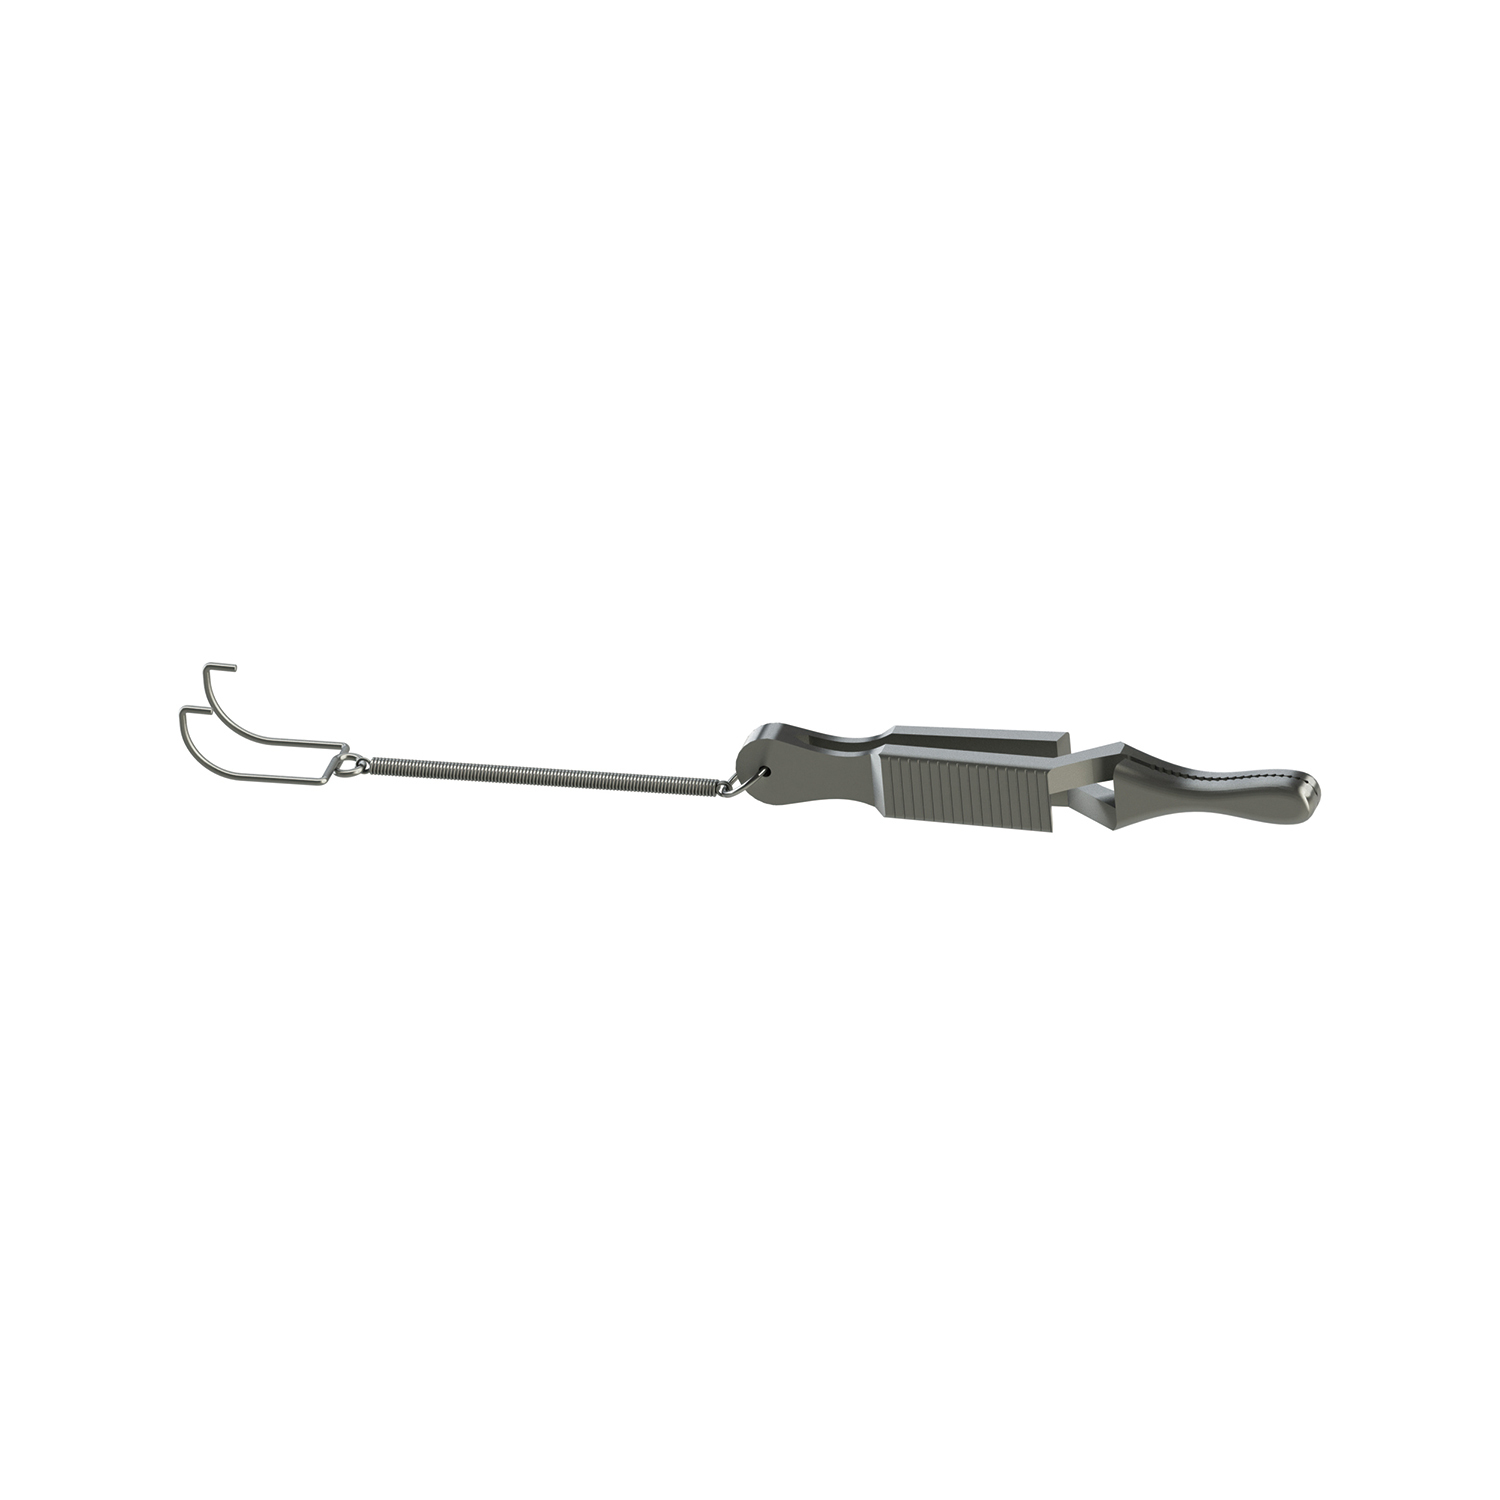 Retractor GOTOU-NAKAMURA 2 Nail-Hook Type Medium, Surgical instruments